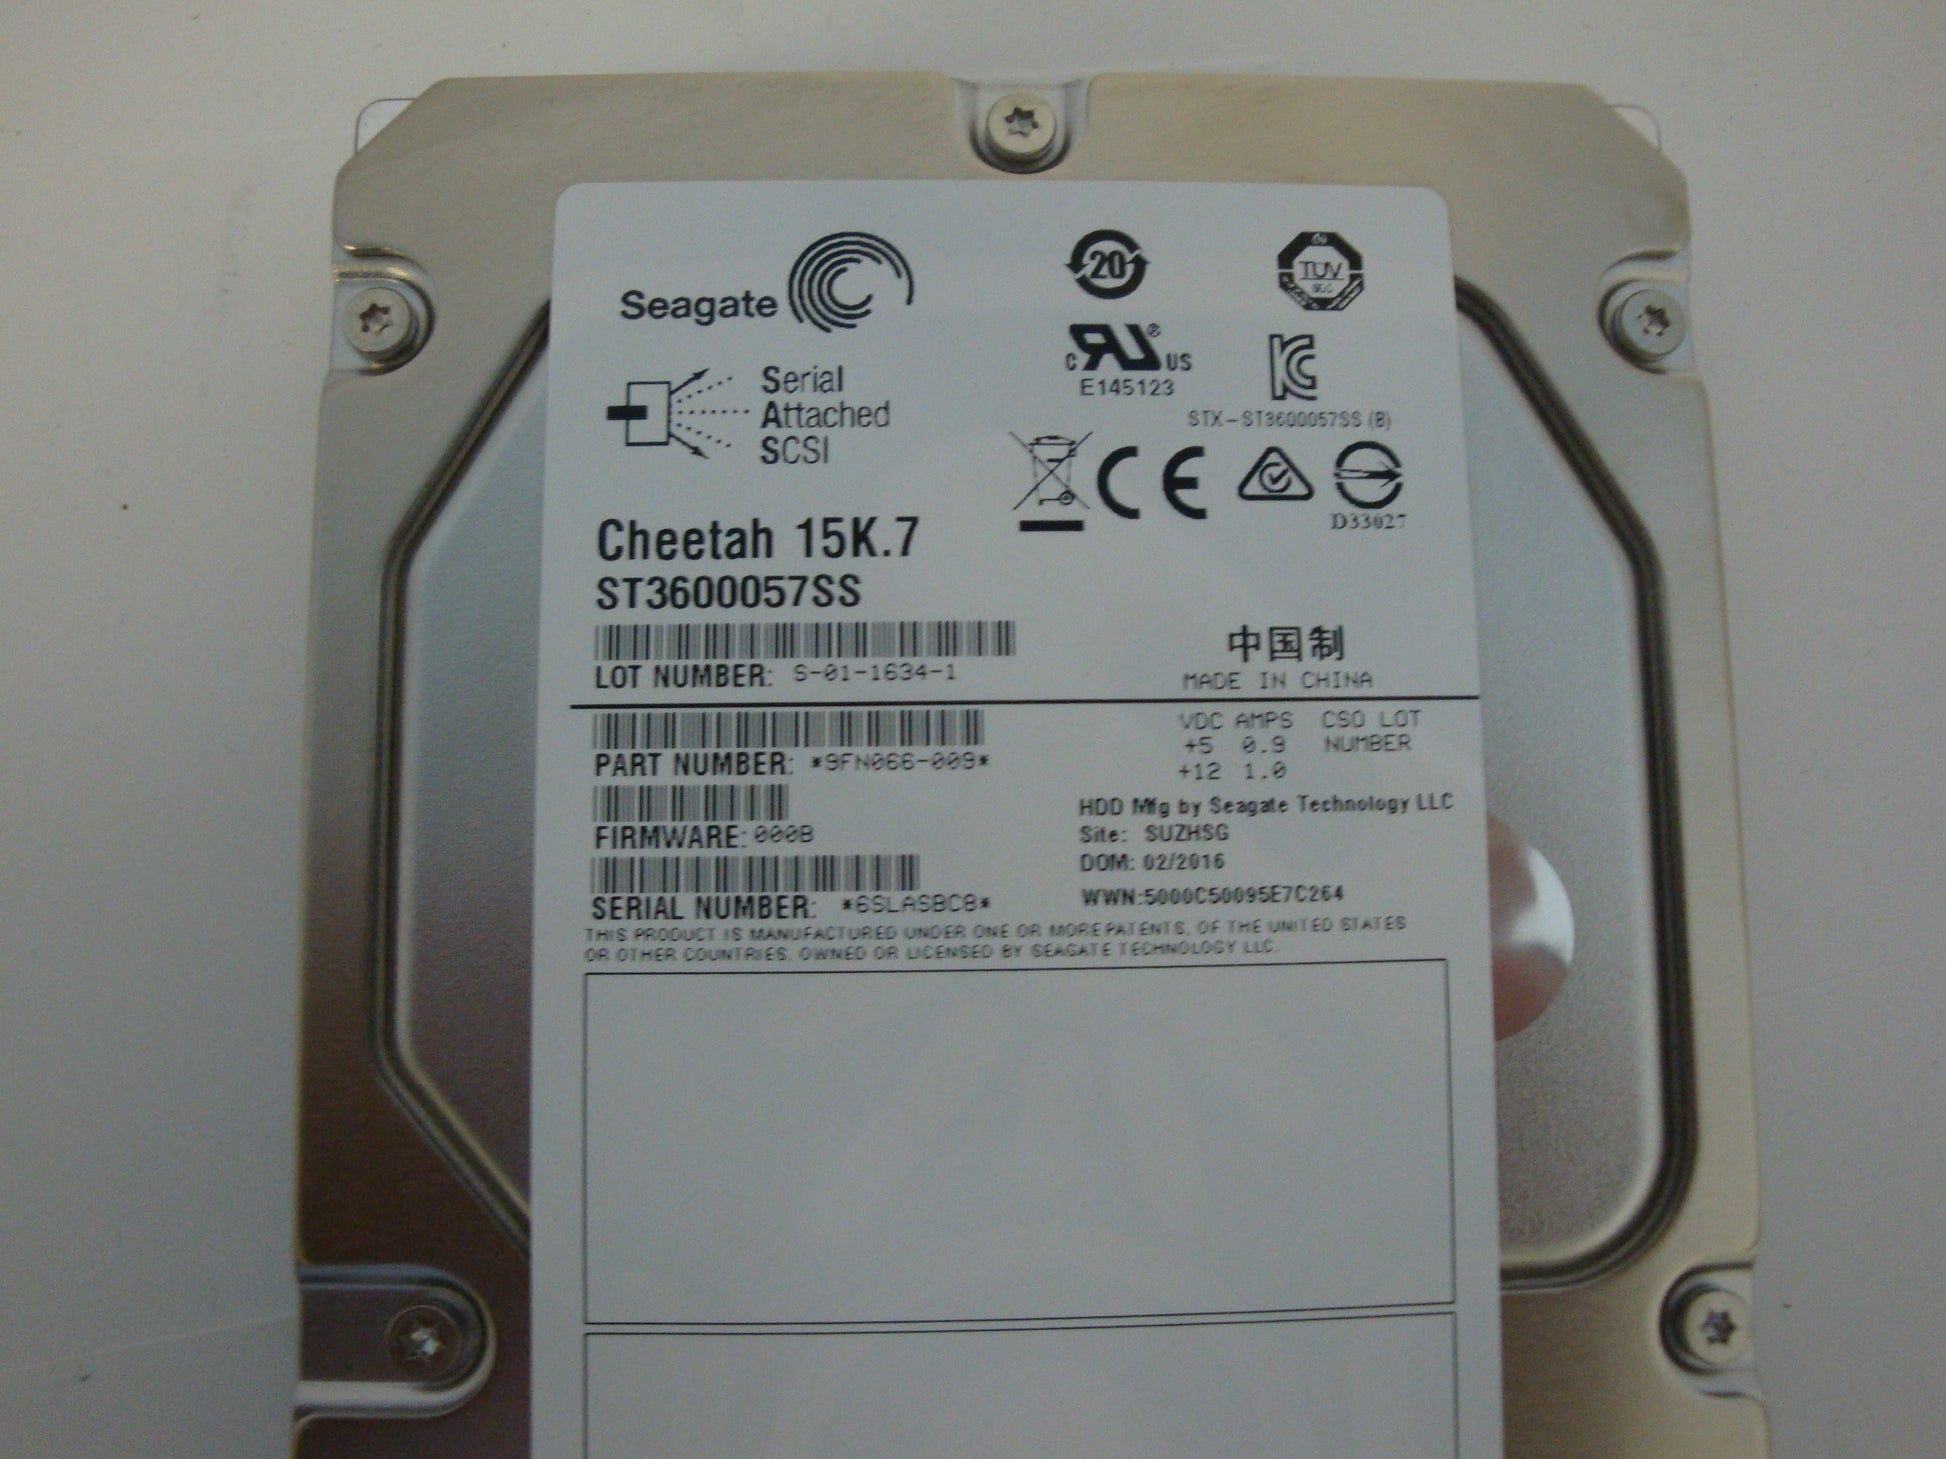 NEW 4 Year- Seagate ST3600057SS Cheetah 15K.7 600 GB,Internal,15000 RPM,3.5" 9FN066-009 - Micro Technologies (yourdrives.com)